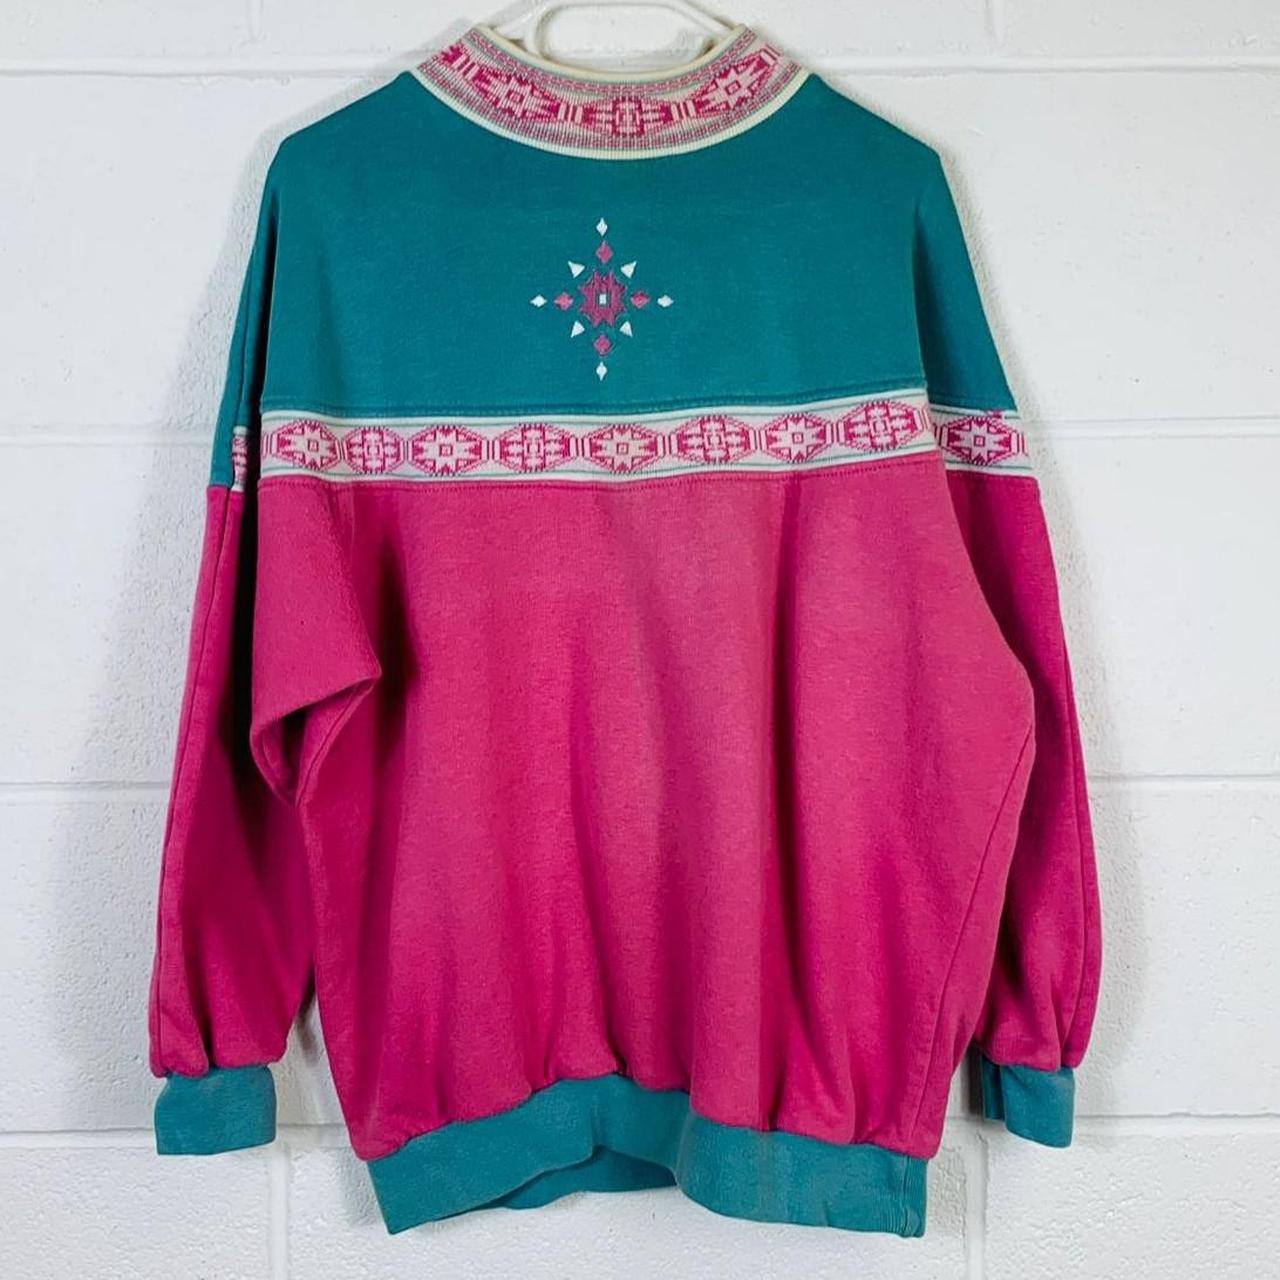 Product Image 2 - Vintage 90s Sweatshirt 

Pink and